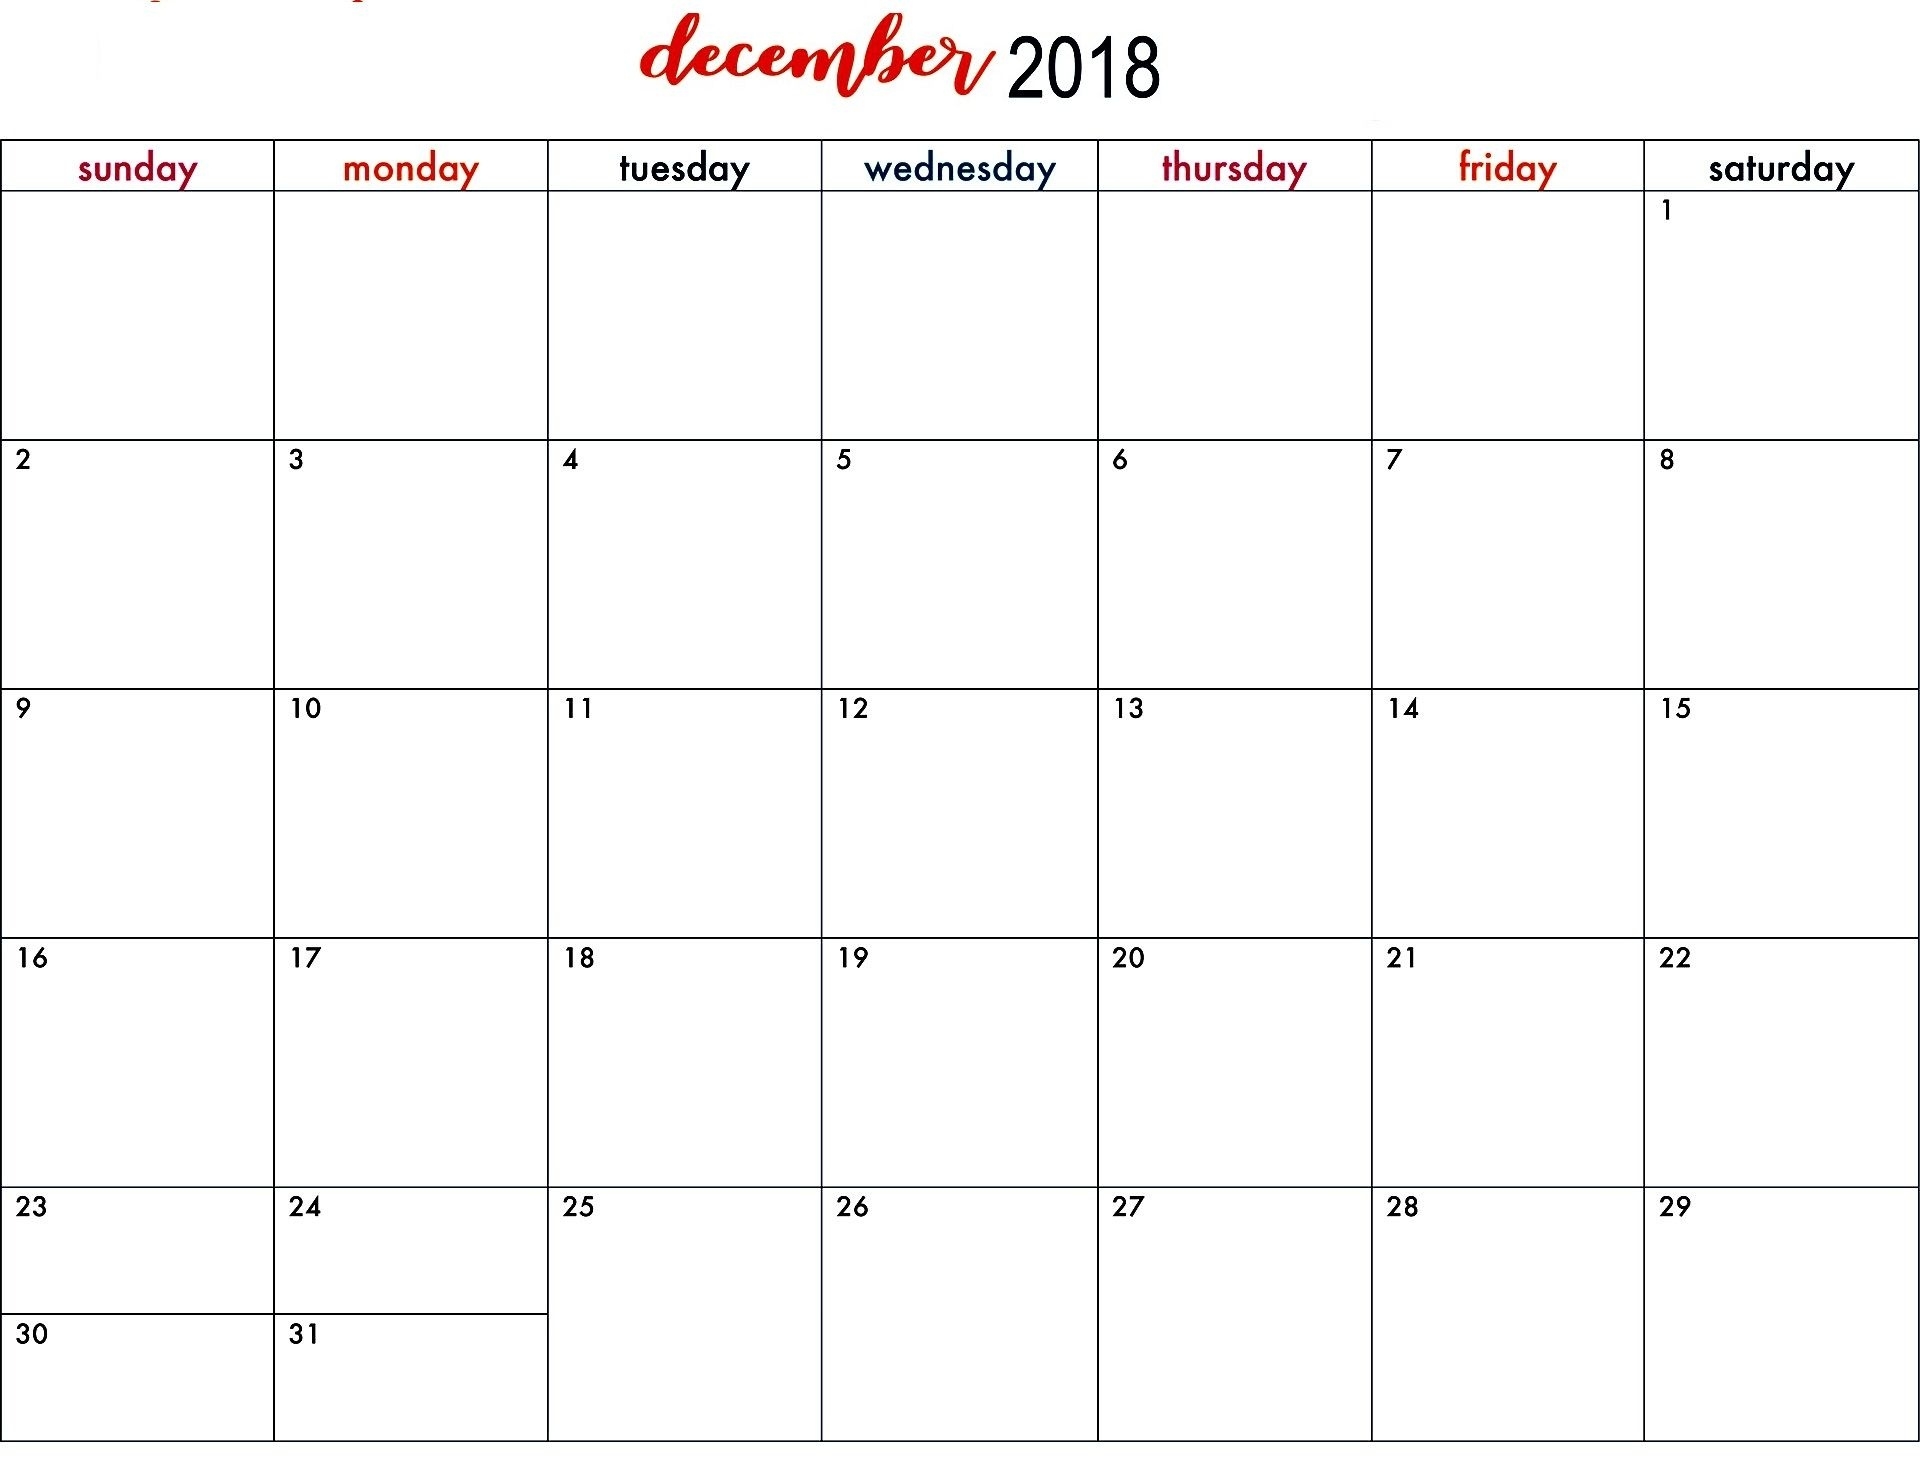 Print December 2018 Calendar With Holidays | December 2018 Holidays Calendar Of Holidays In December